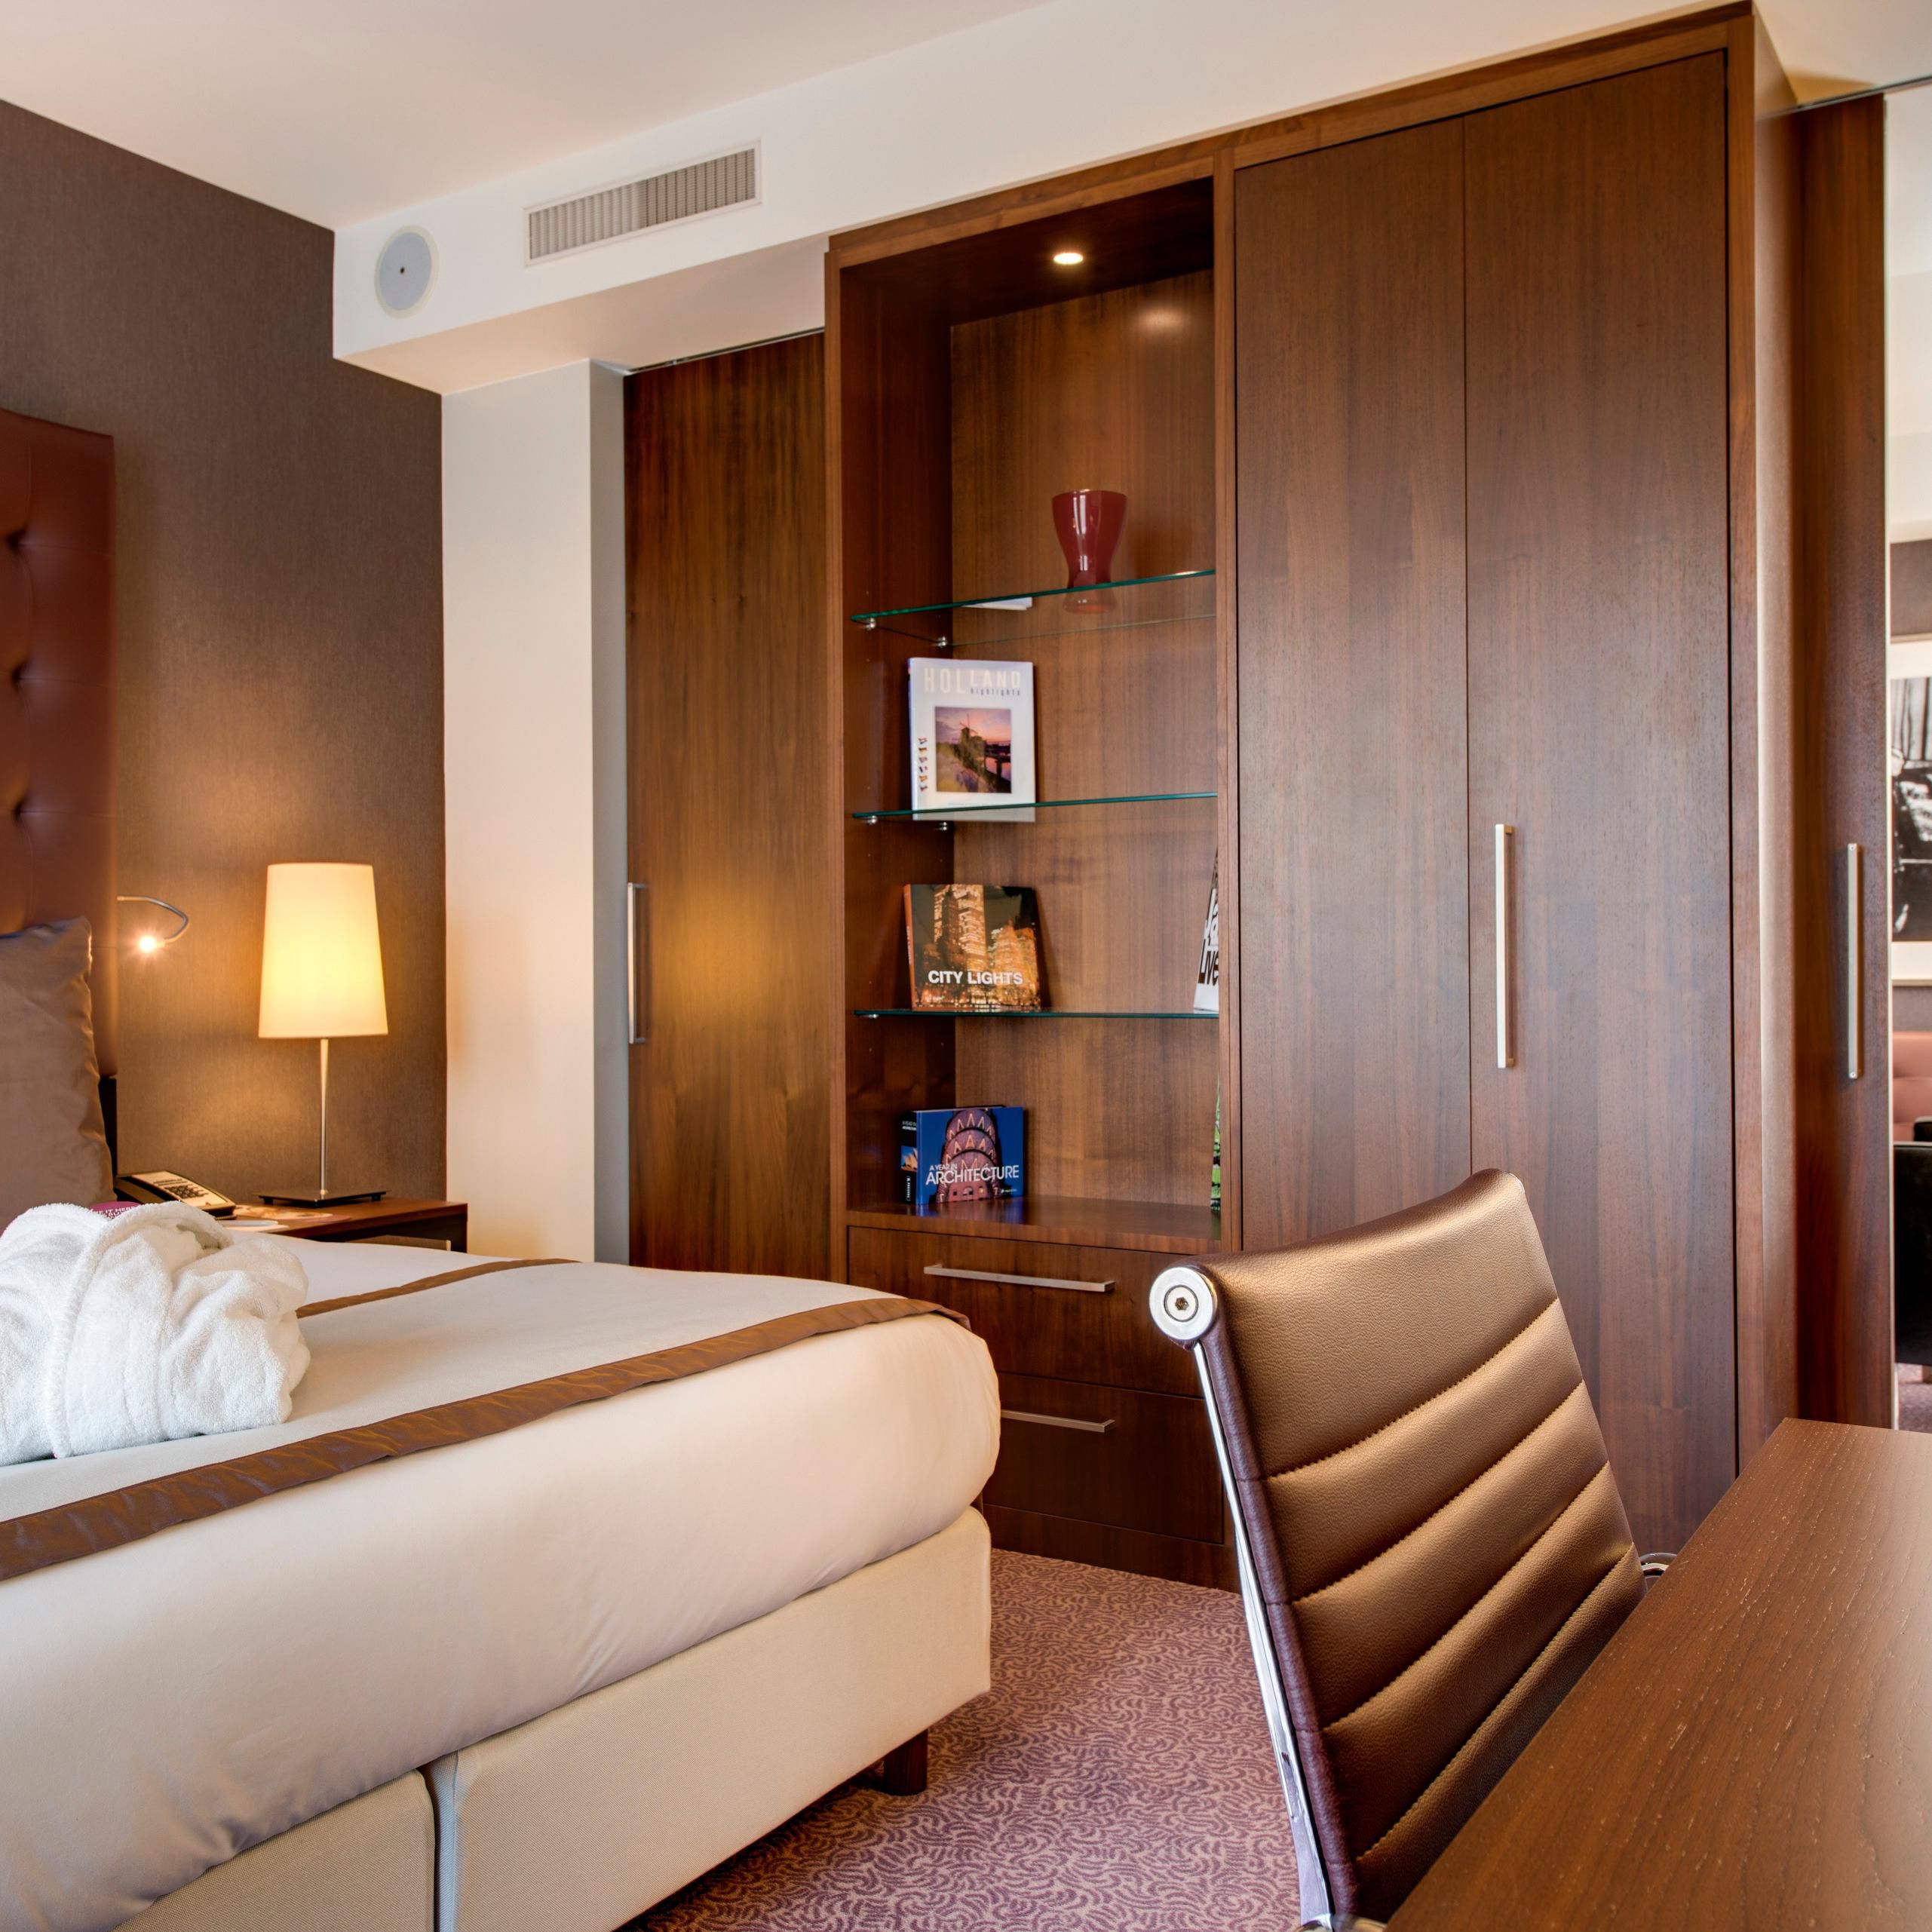 Prachtige Junior Suite van het Crowne Plaza hotel Amsterdam South